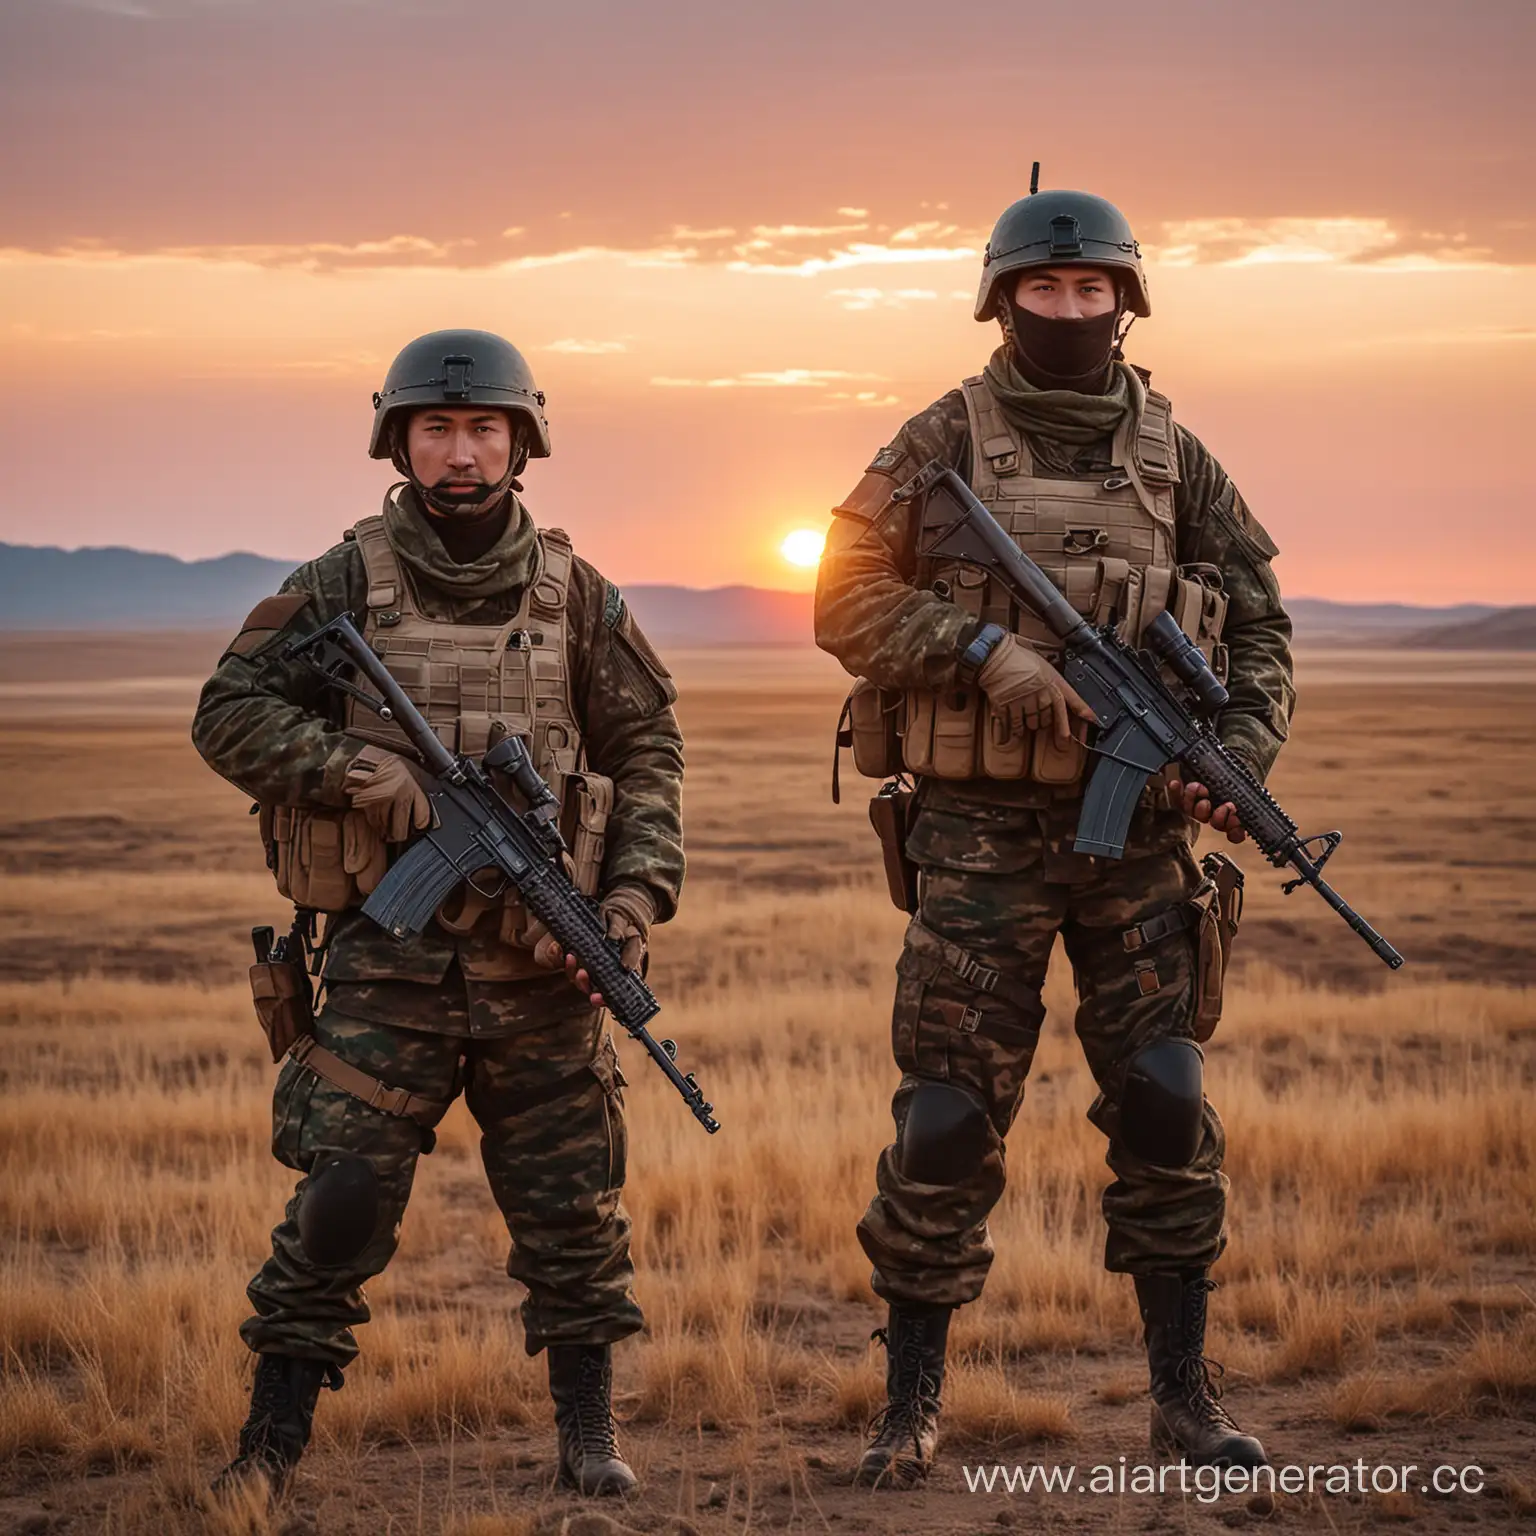 Kazakh-Special-Forces-Training-Amidst-Sunset-Steppe-Landscape